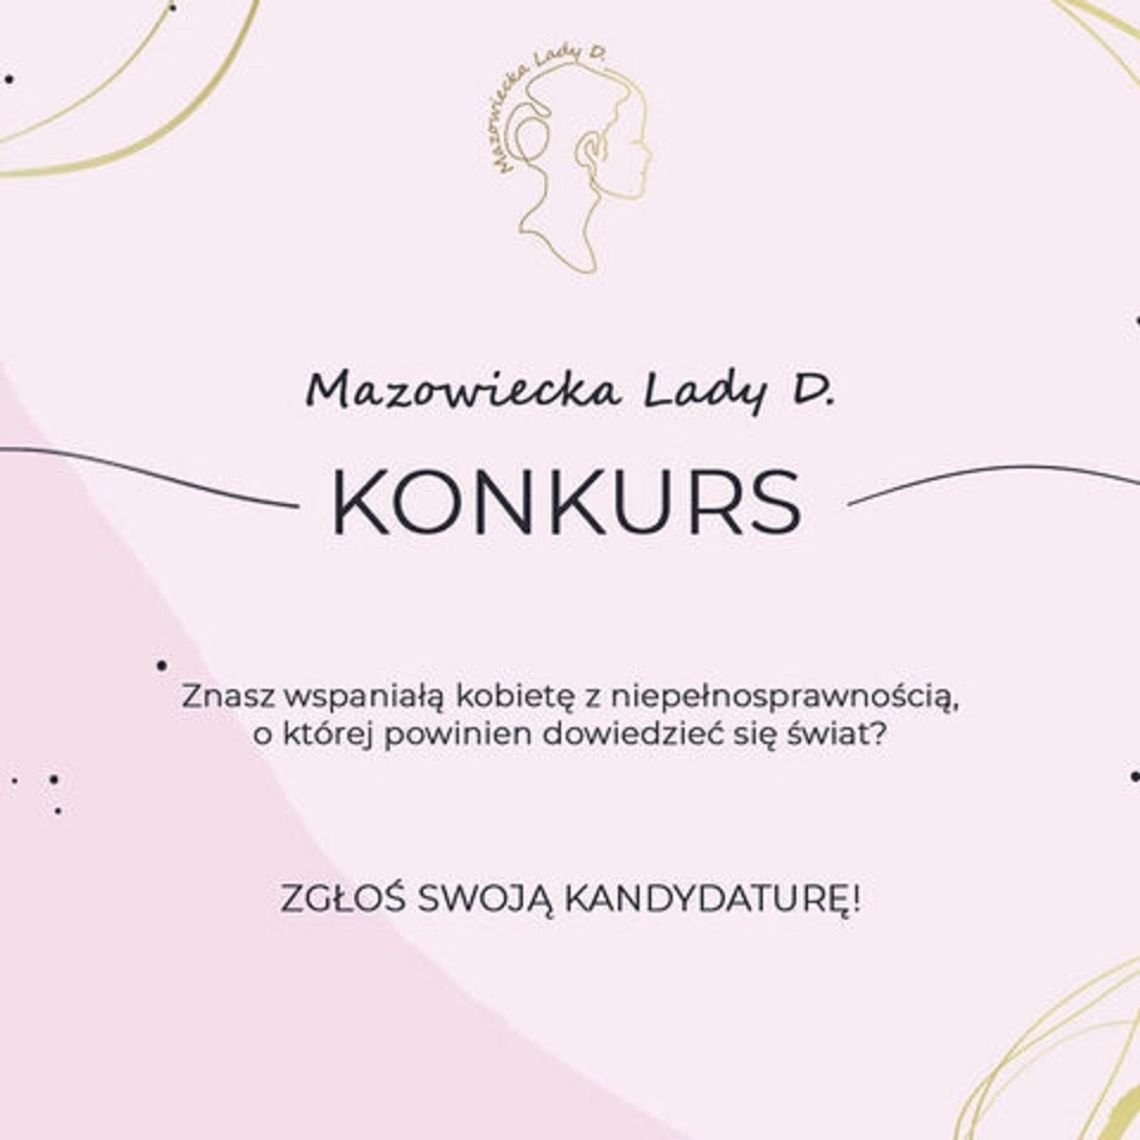 Mazowiecka Lady D. im. Krystyny Bochenek